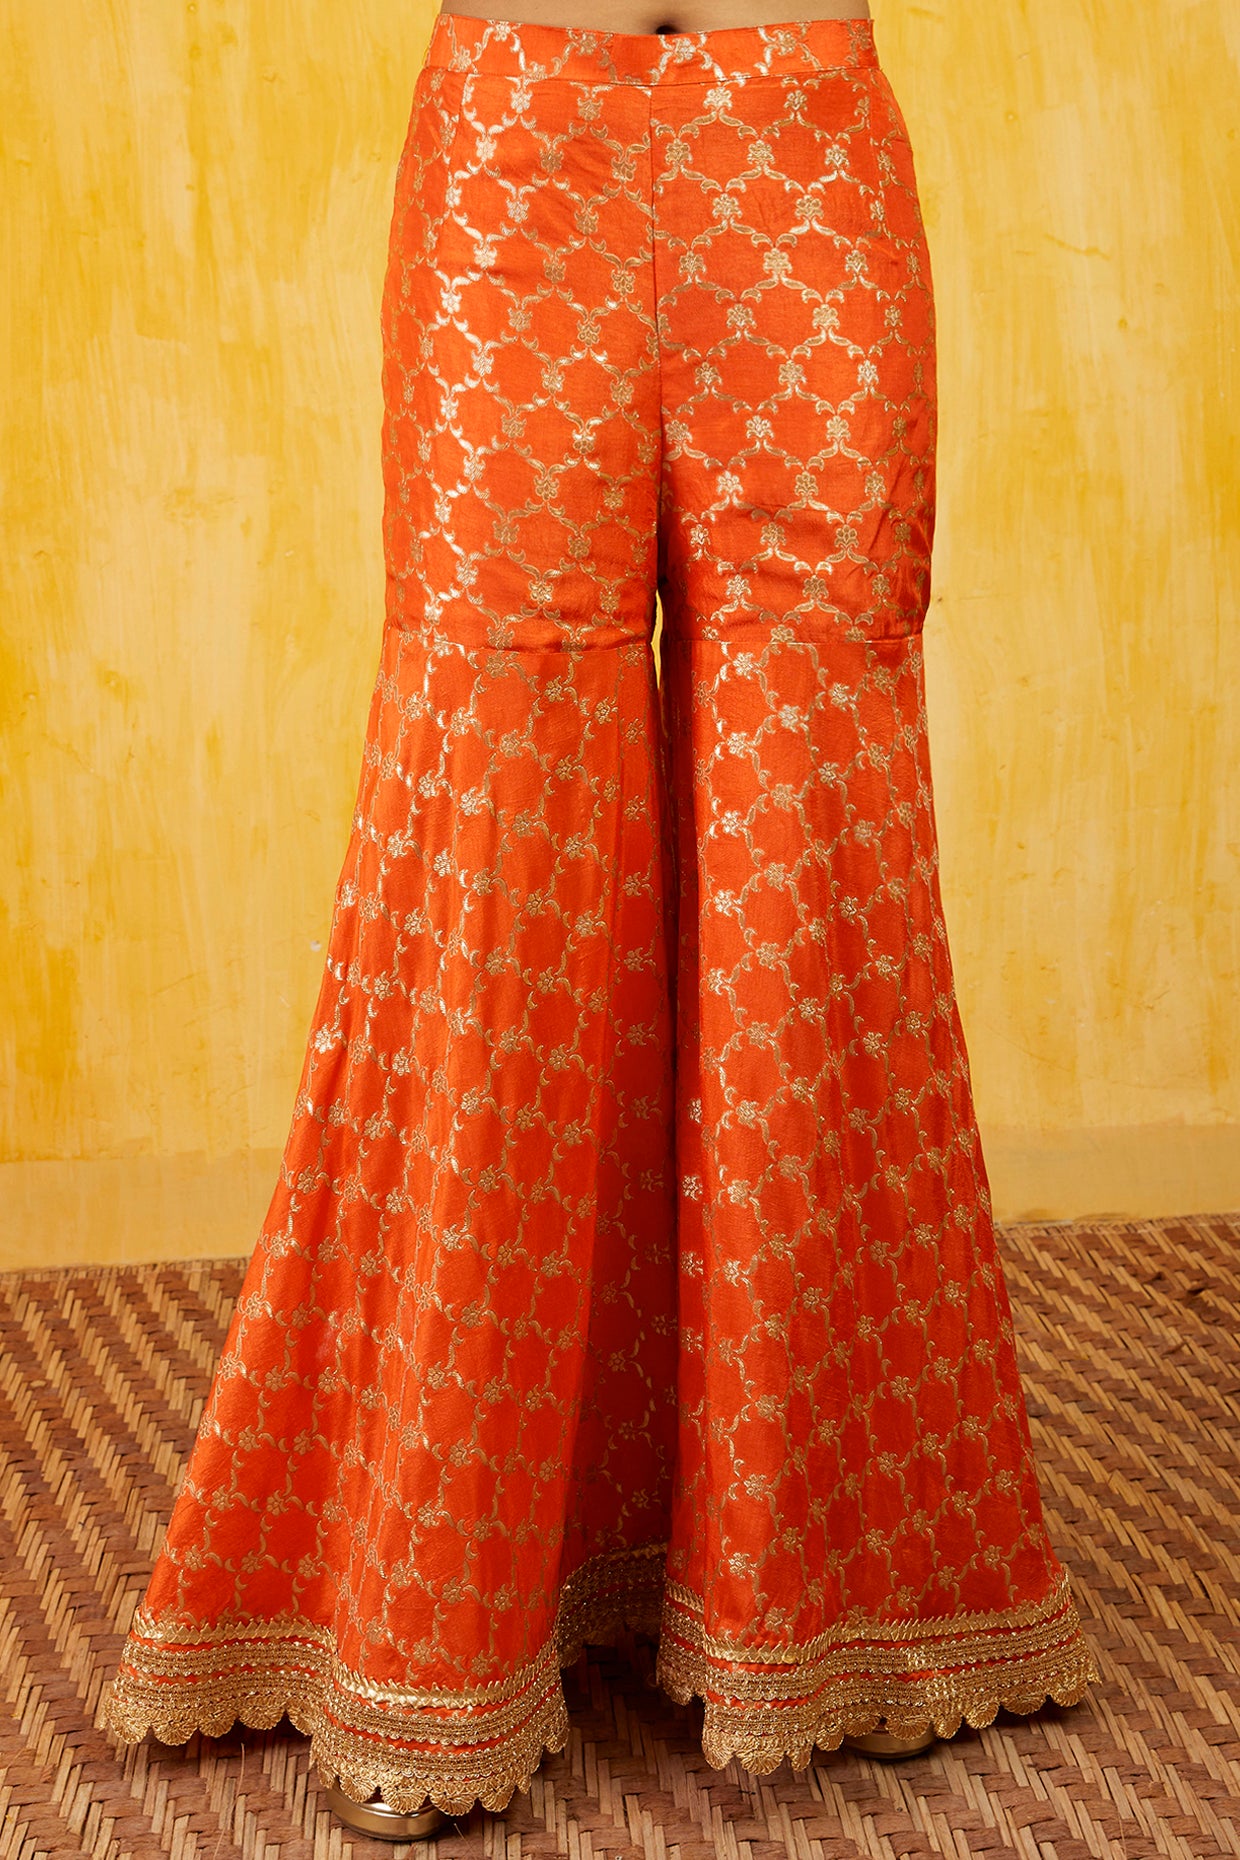 Gopi vaid Marigold Brocade FO With Sharara orange festive indian designer wear online shopping melange singapore